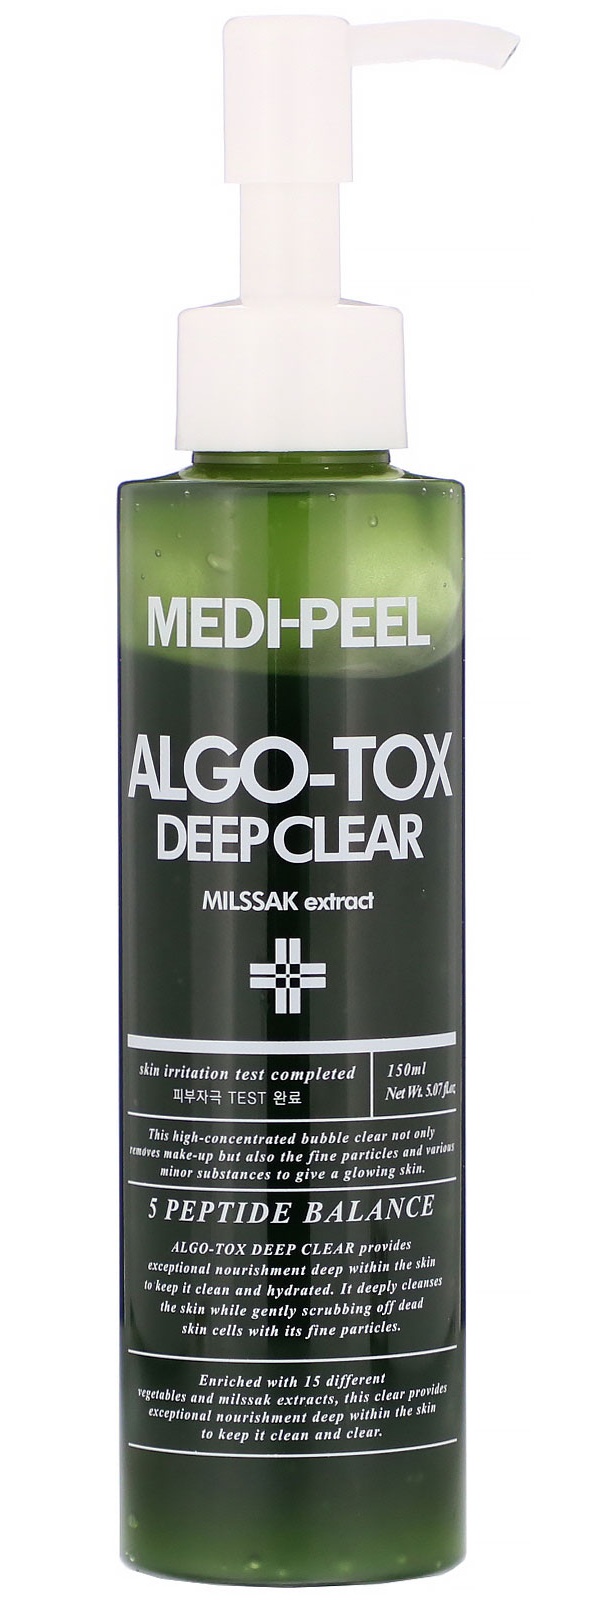 MEDI-PEEL Algo-Tox Deep Clear